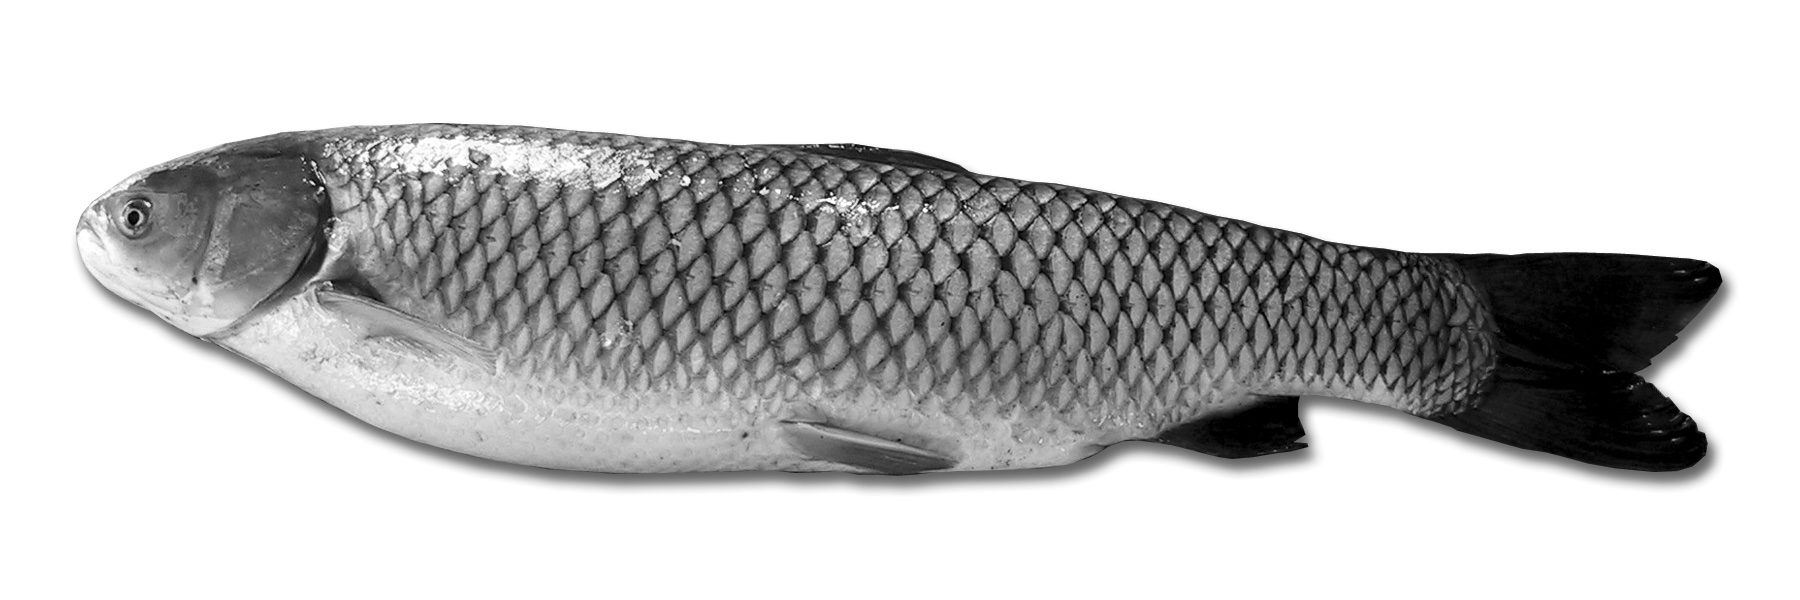 Figure 1. Grass carp or white amur (Ctenopharyngodon idella)